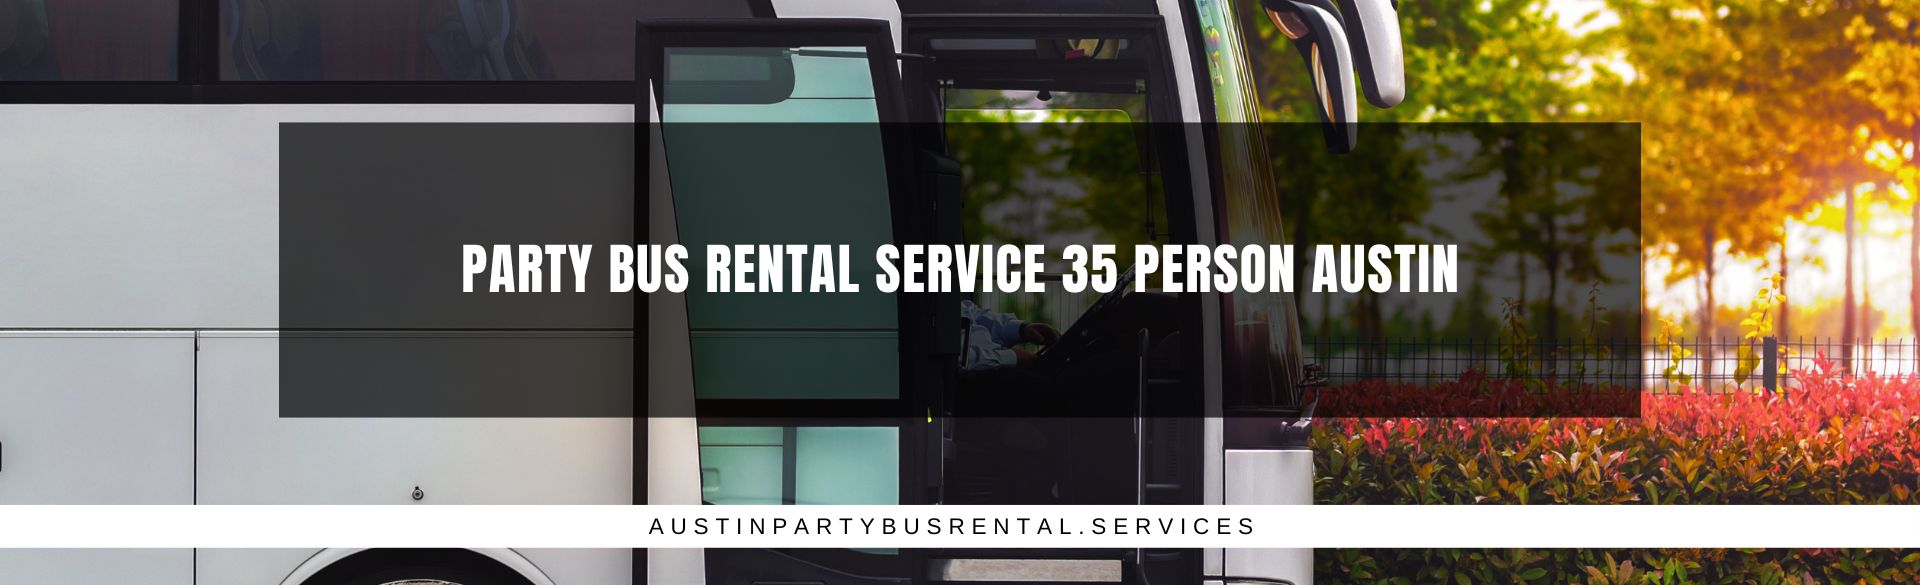 Party Bus Rental Service 35 Person Austin